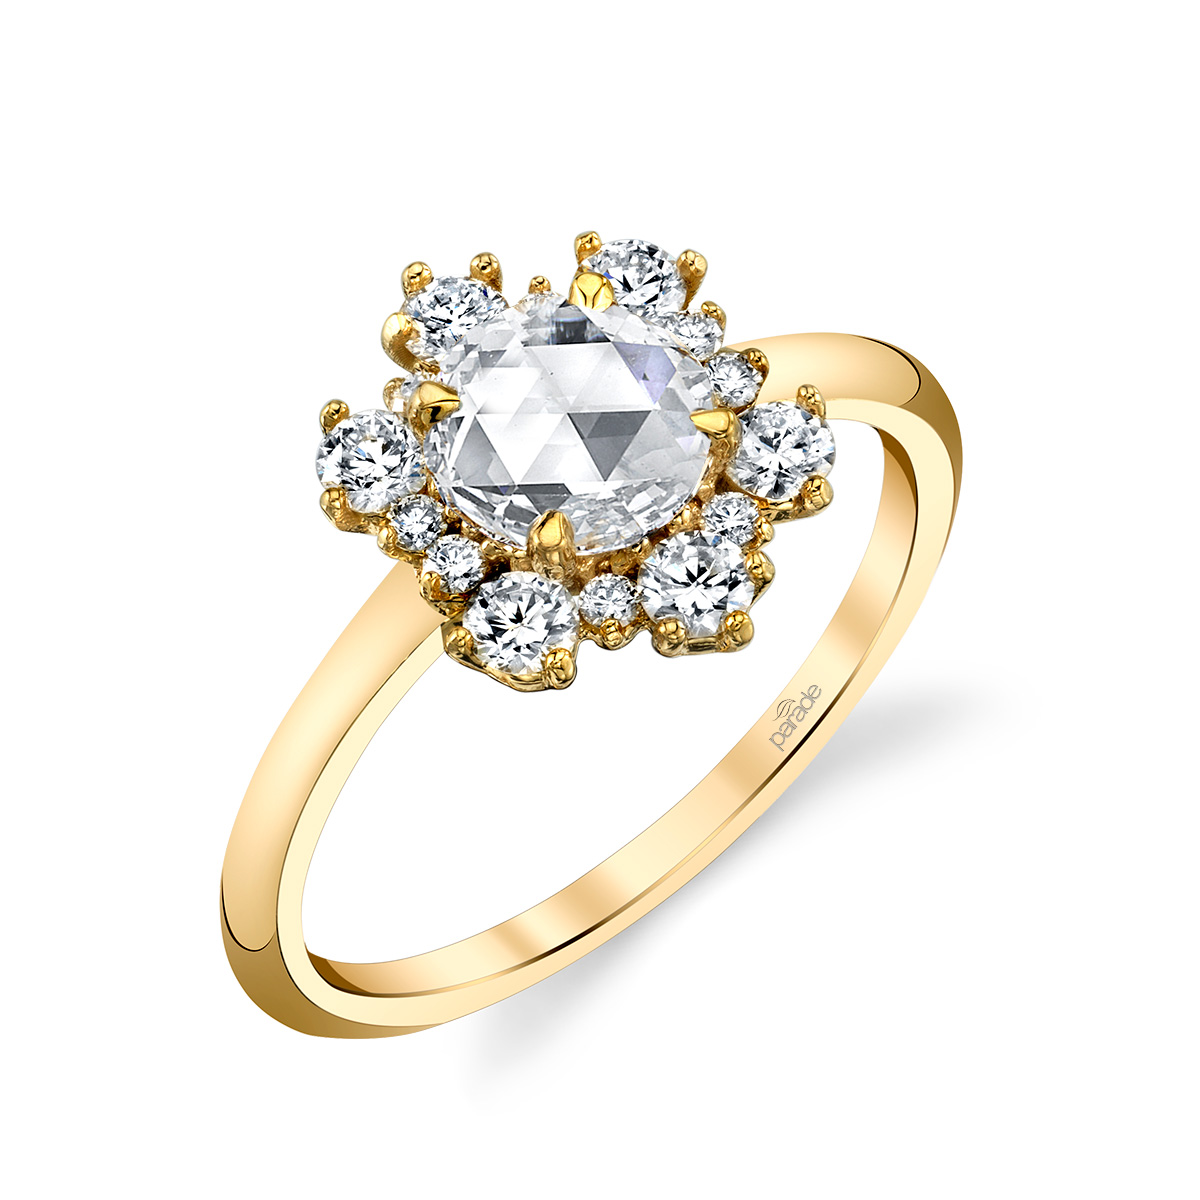 Designer diamond and rose cut diamond engagement ring by Parade Design.